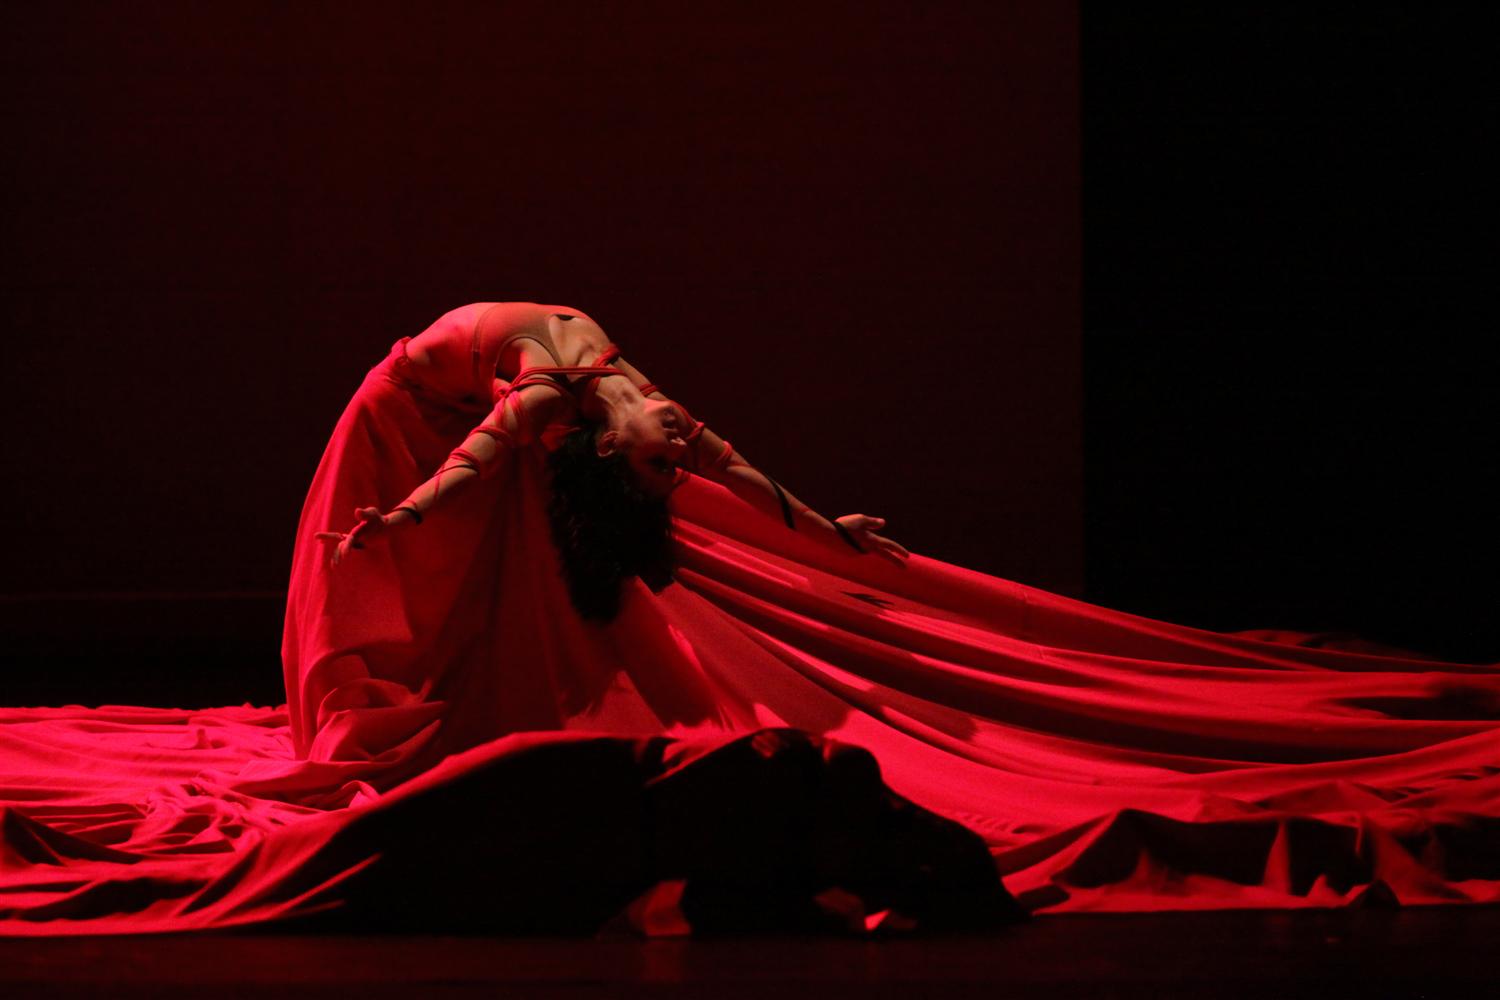 Nueva presentación del Ballet Nacional|Tetã Ballet ohechauka jeýtama hembiapo imagen